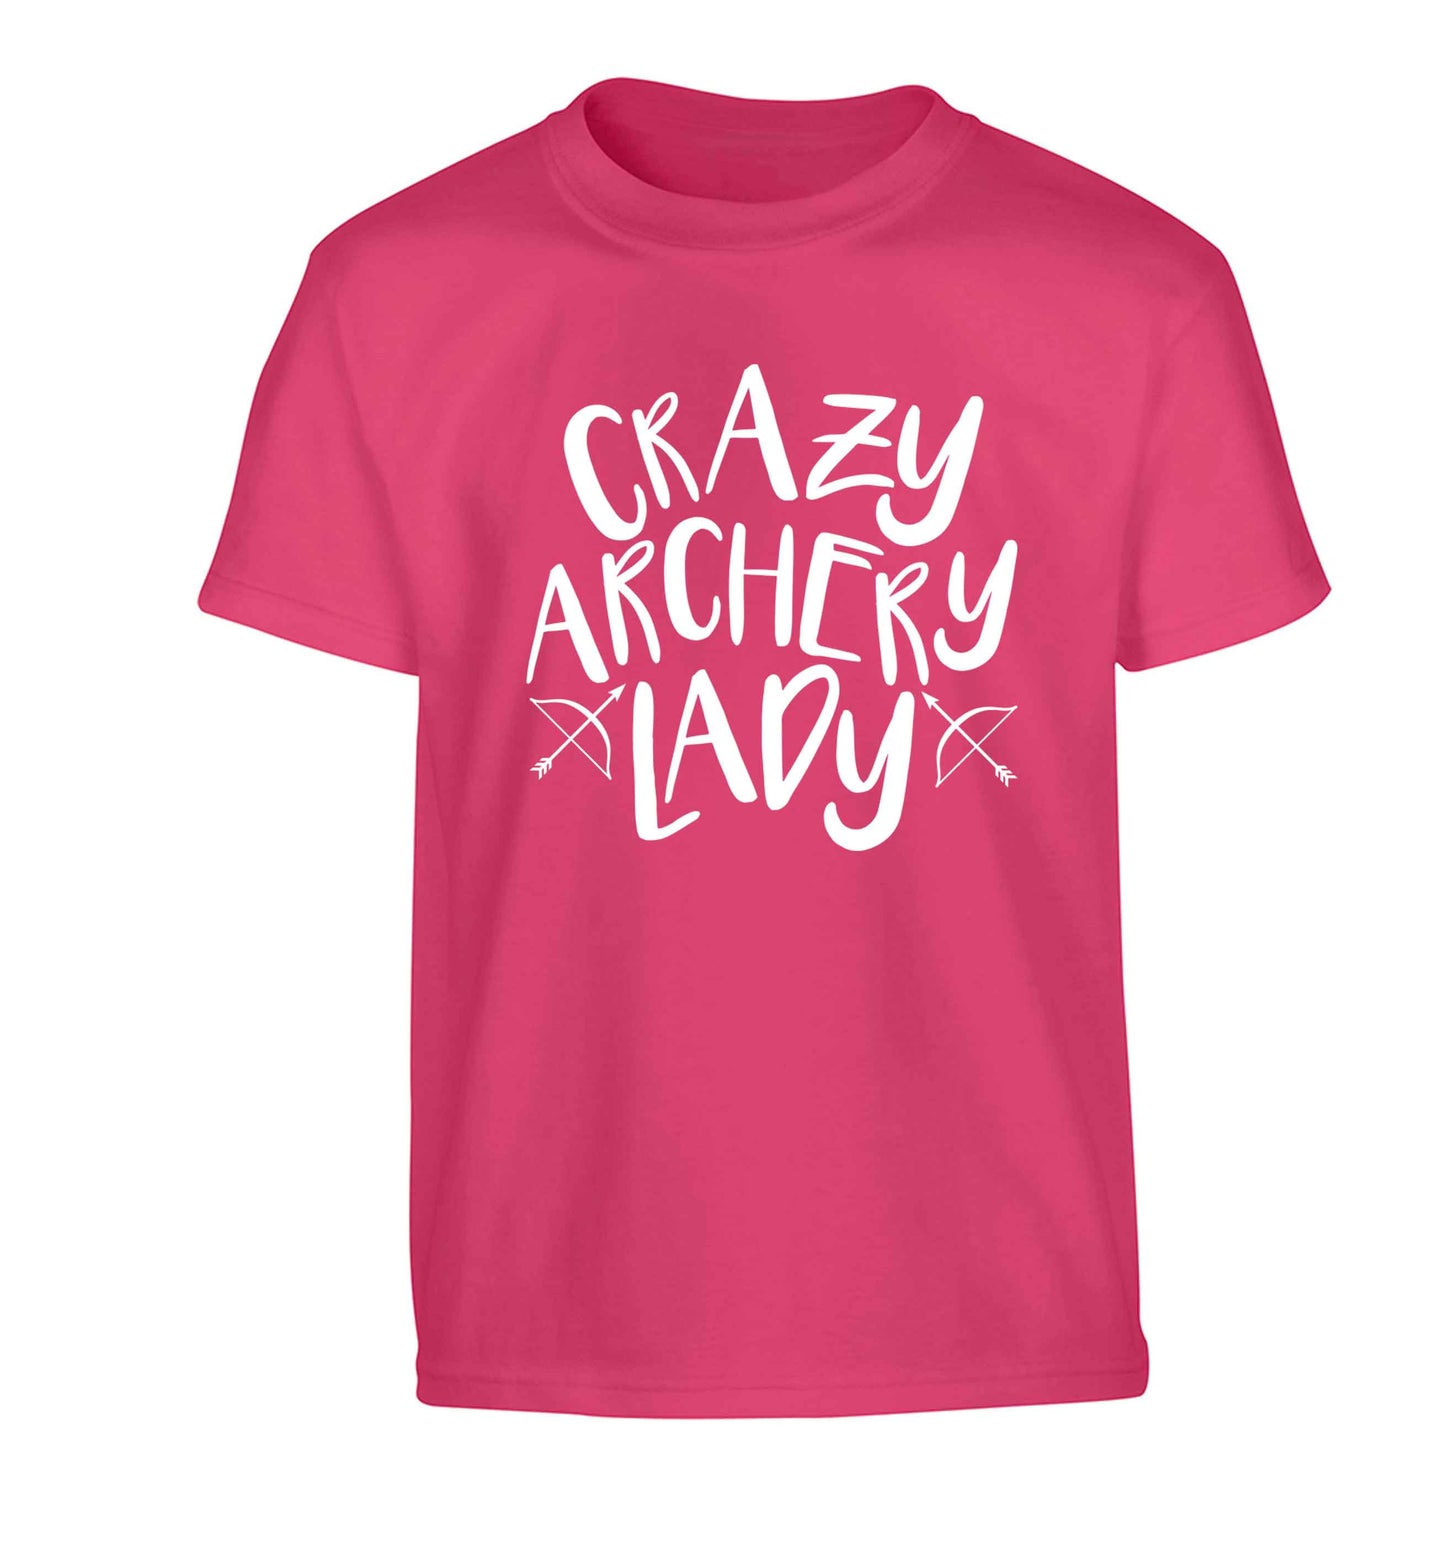 Crazy archery lady Children's pink Tshirt 12-13 Years